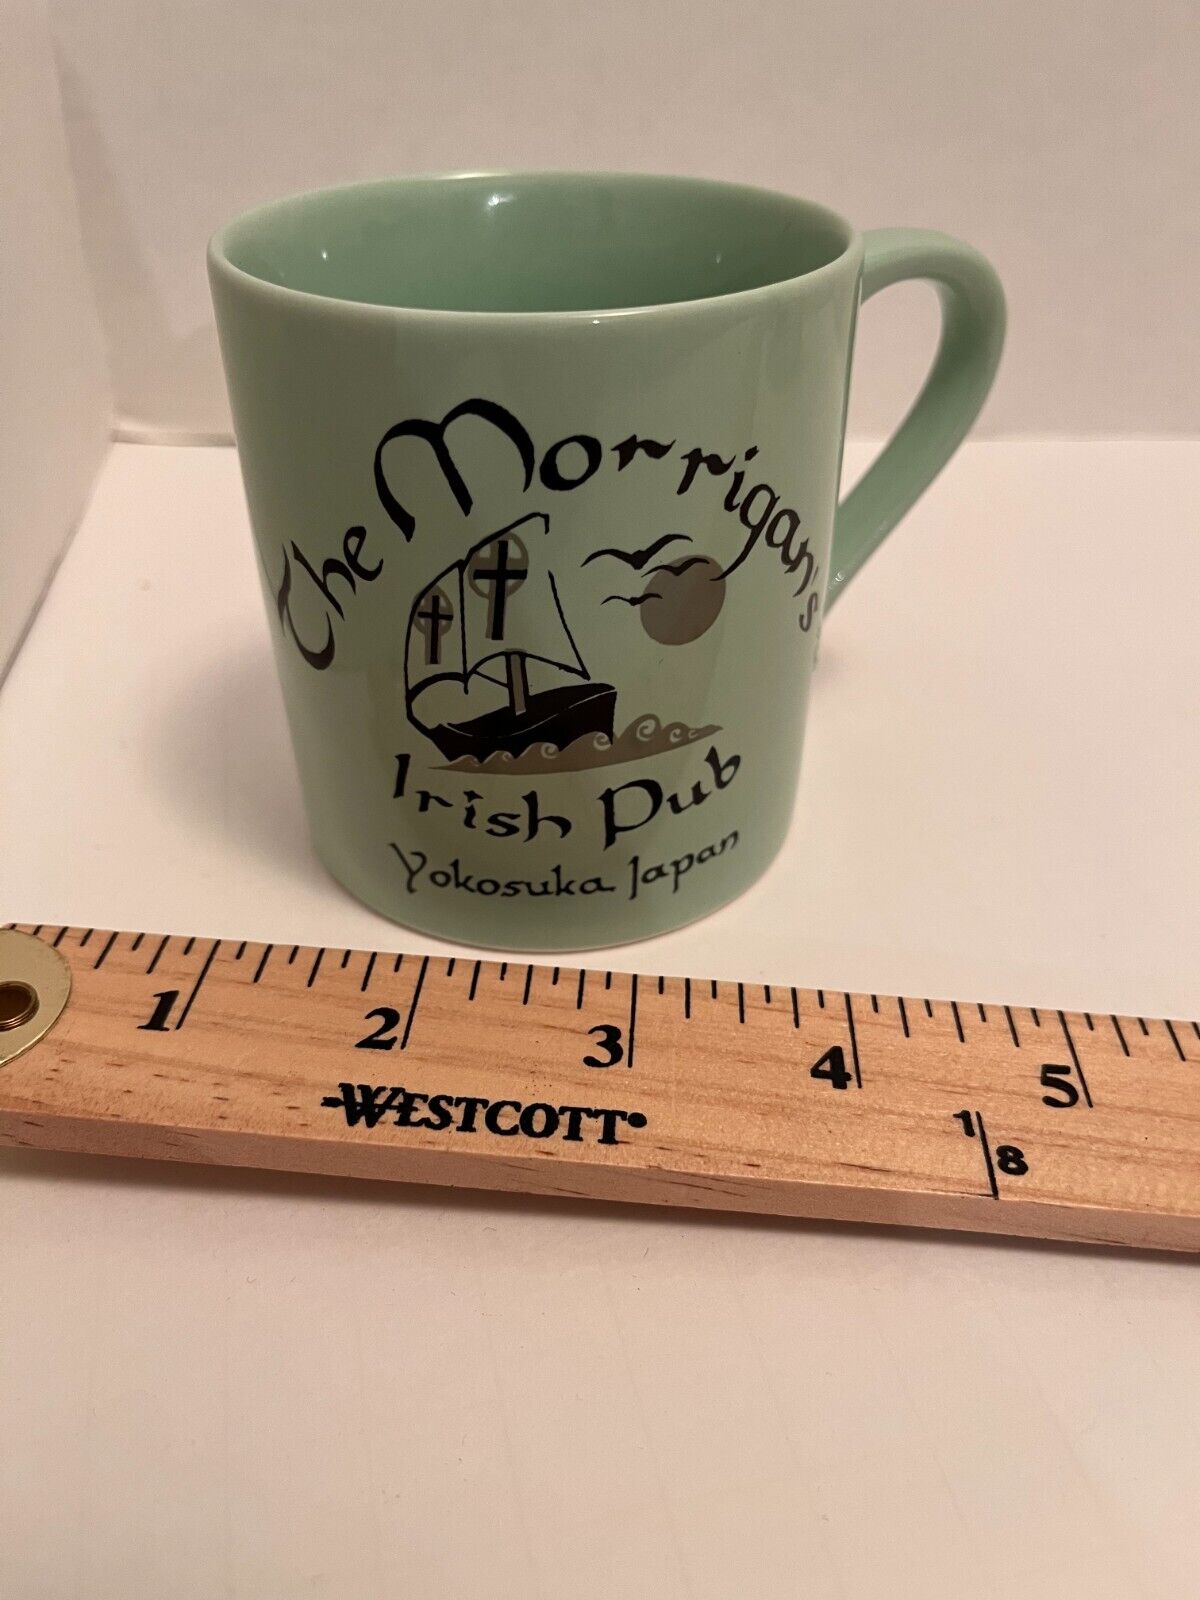 The Morrigan's Irish Pub Yokosuka Japan Coffee Cup Ceramic HTF Vintage US Navy